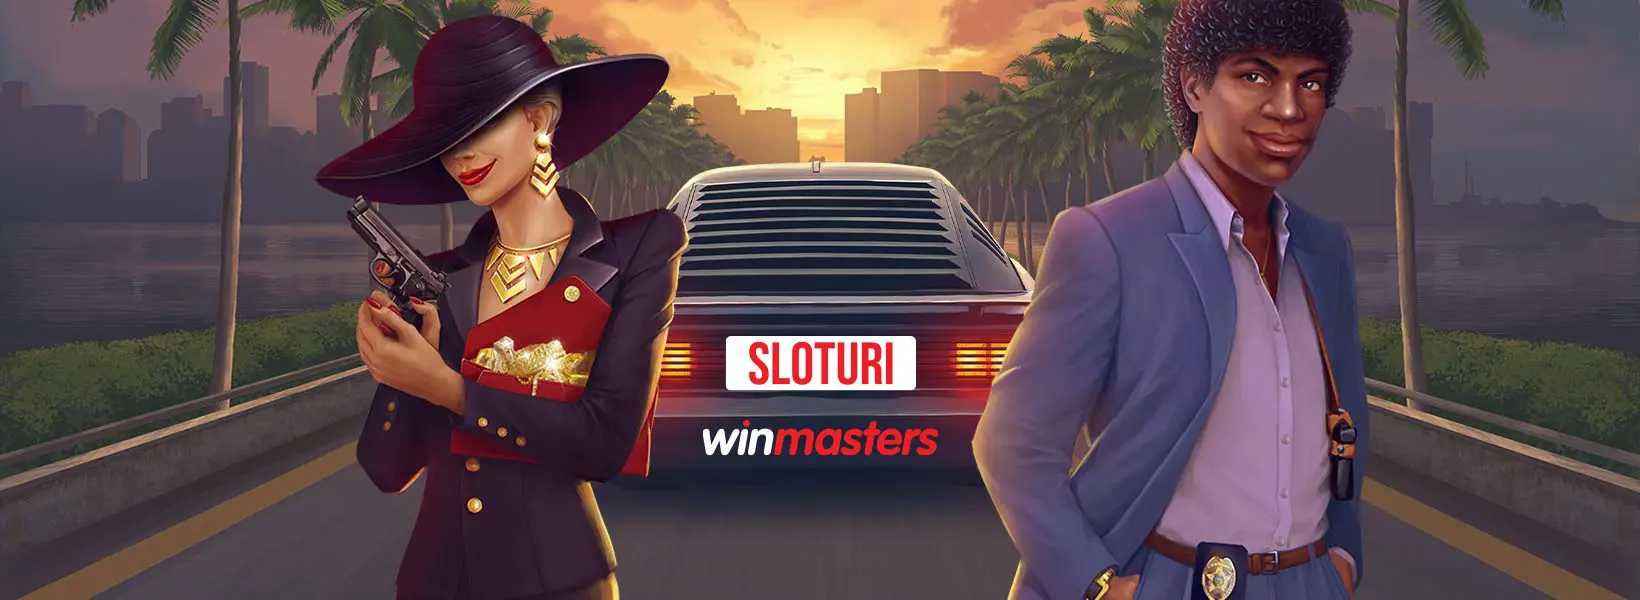 banner sloturi winmasters